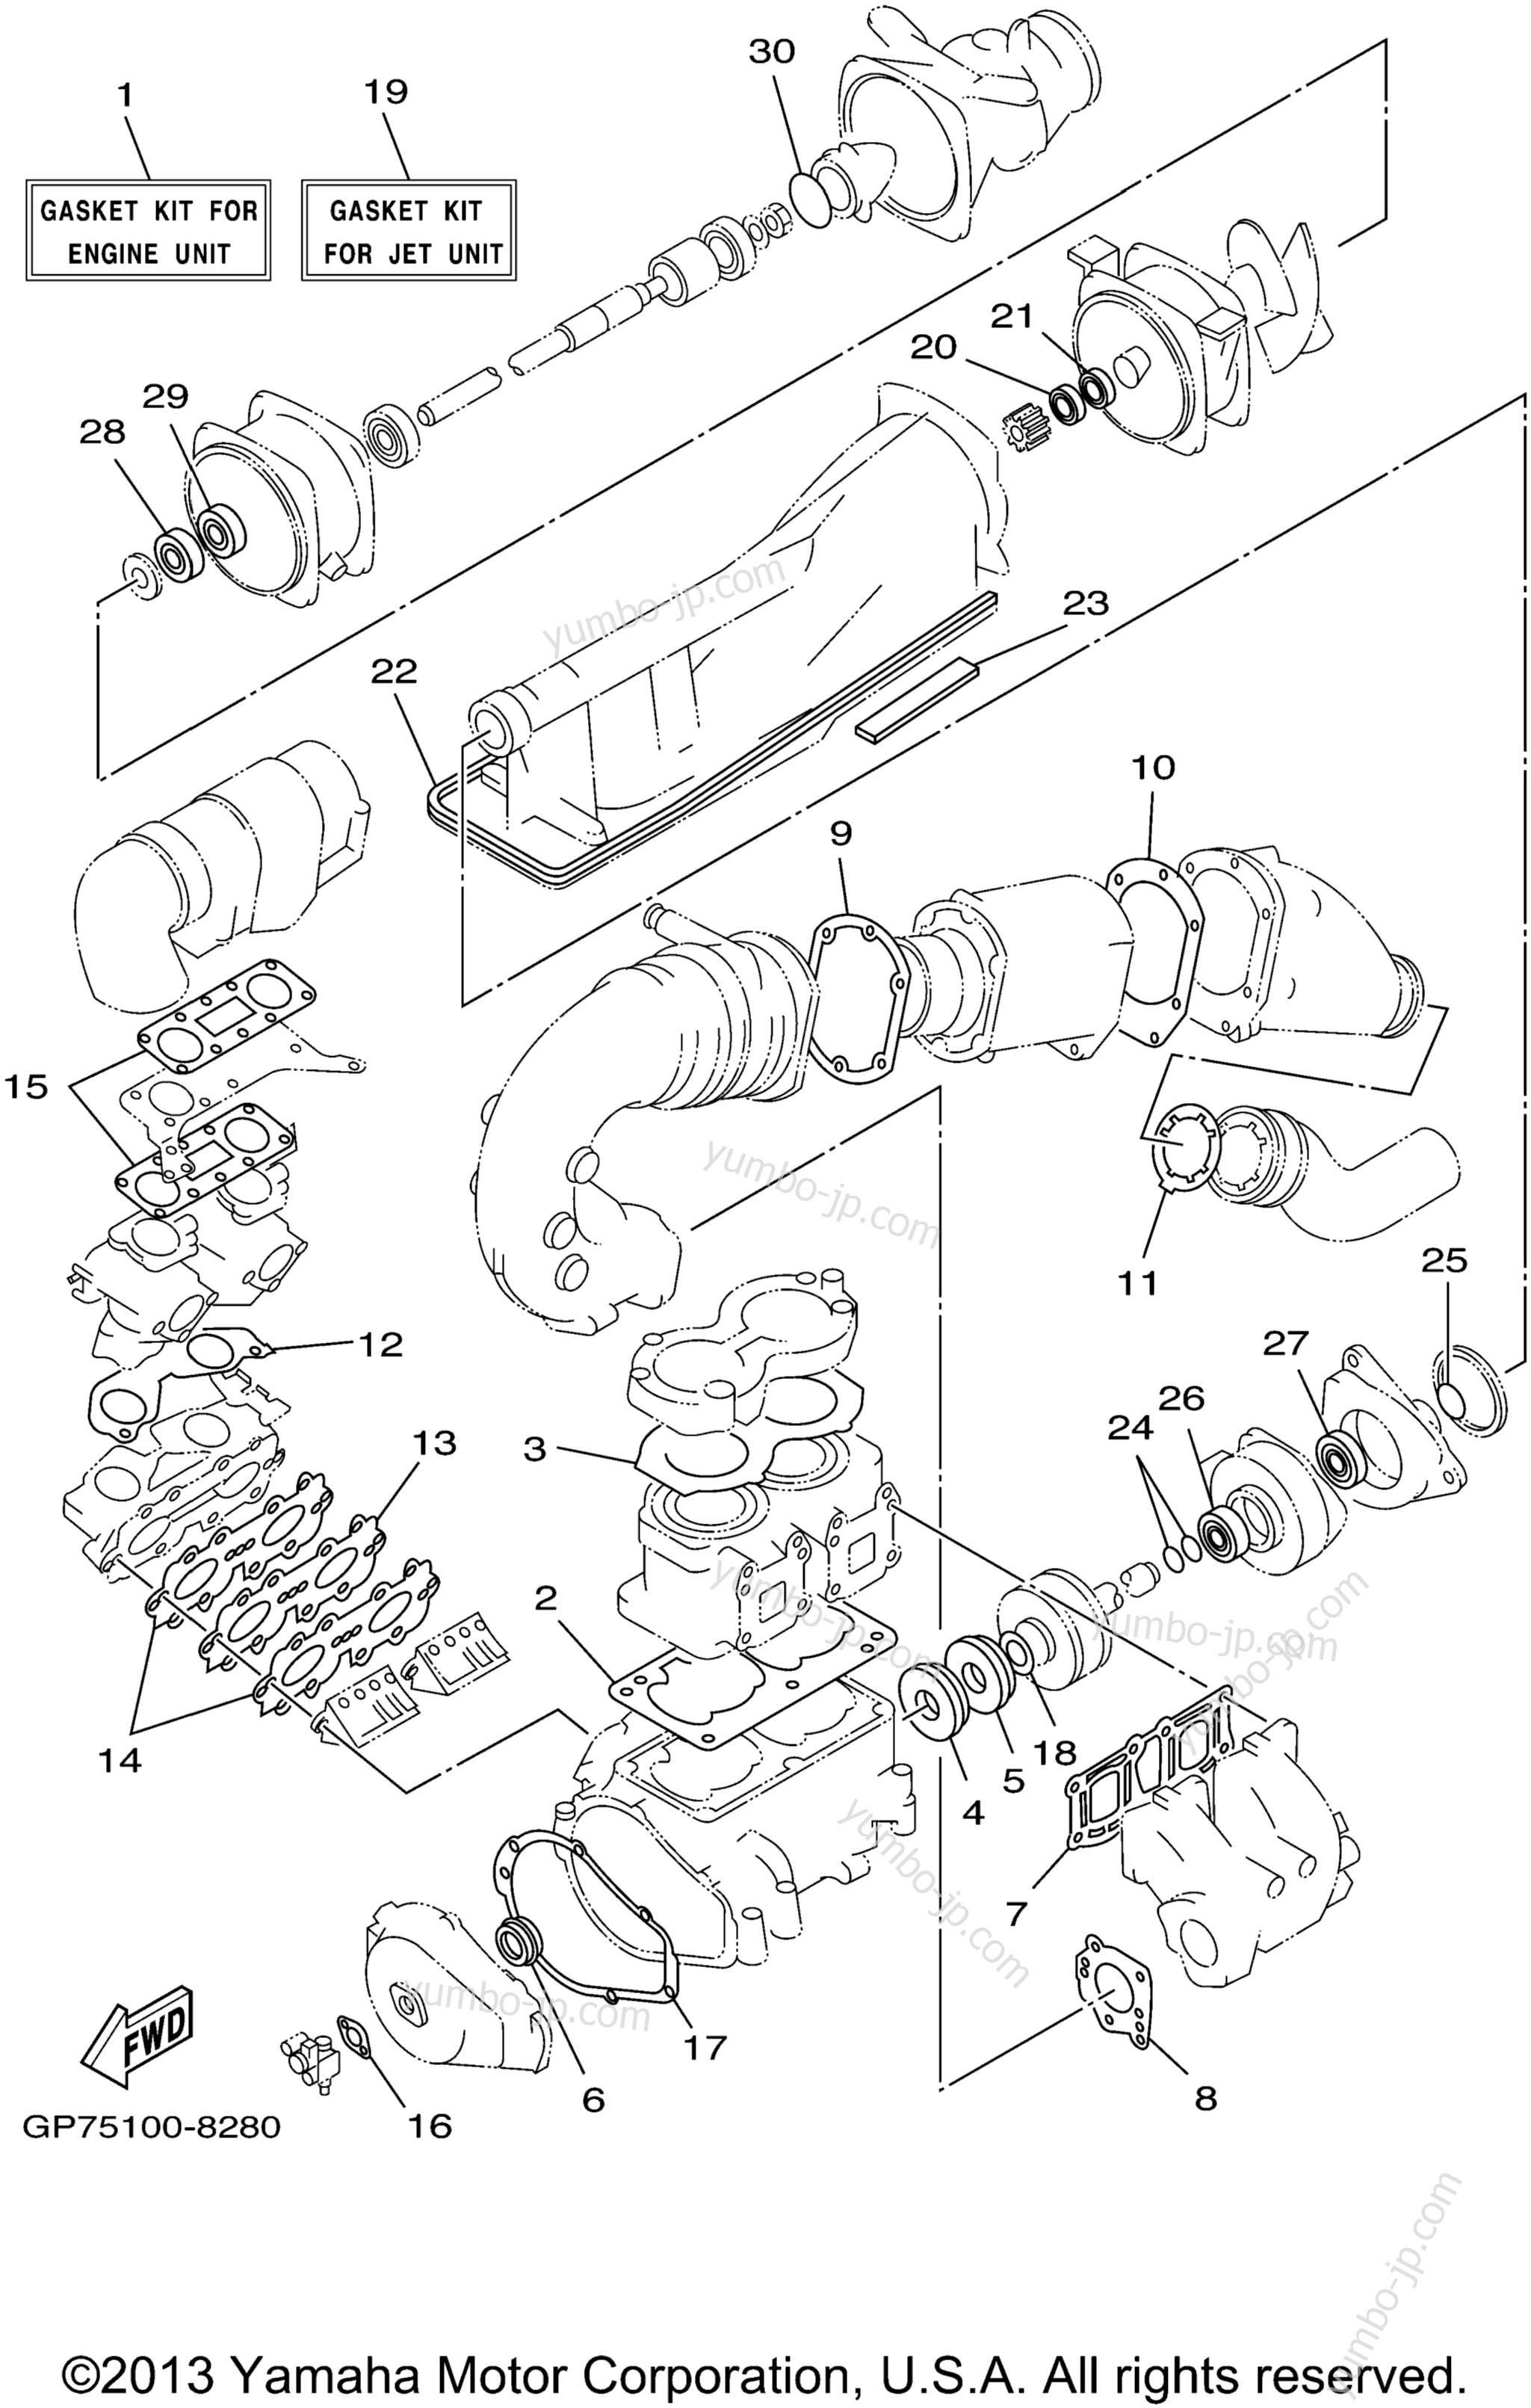 Repair Kit 1 для гидроциклов YAMAHA WAVE RUNNER GP760 (GP760X) 1999 г.